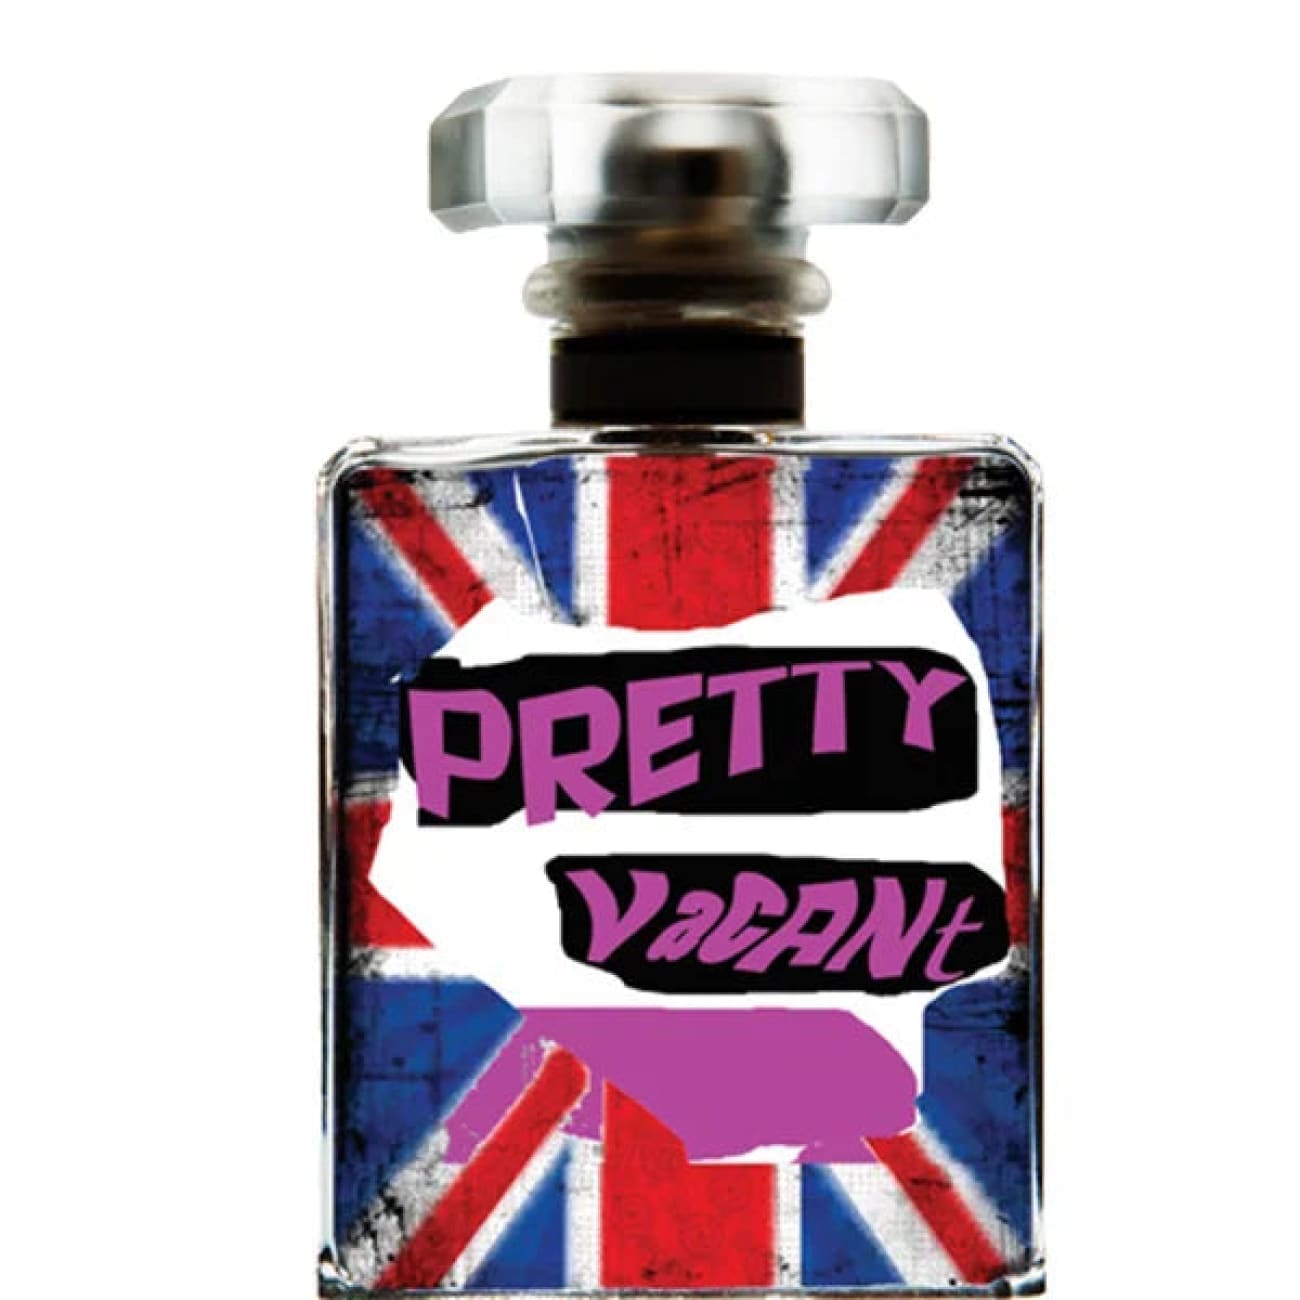 Rock Chocs  PRETTY VACANT PERFUME Brighton Perfume Brighton perfume HEDONIST perfume Pretty Vacant vegan perfume